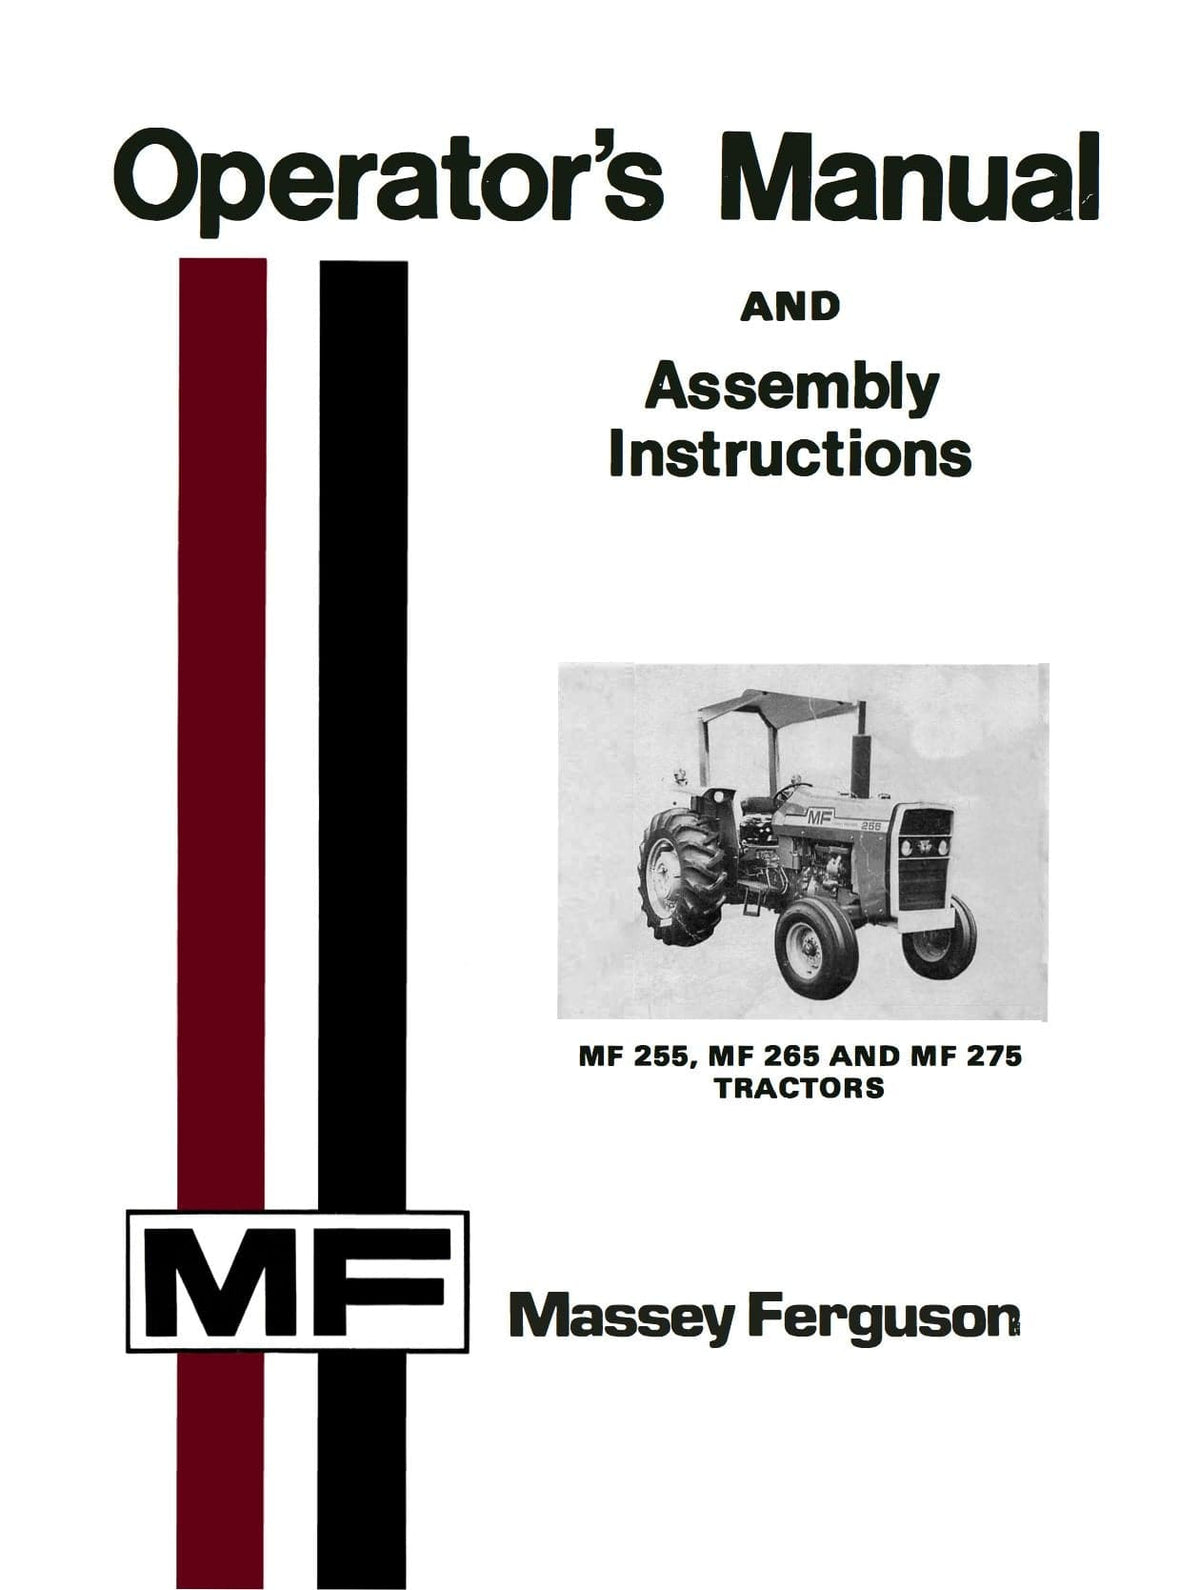 Massey Ferguson MF 255, MF 265 and MF 275 Tractors - Operator's Manual - Ag Manuals - A Provider of Digital Farm Manuals - 1